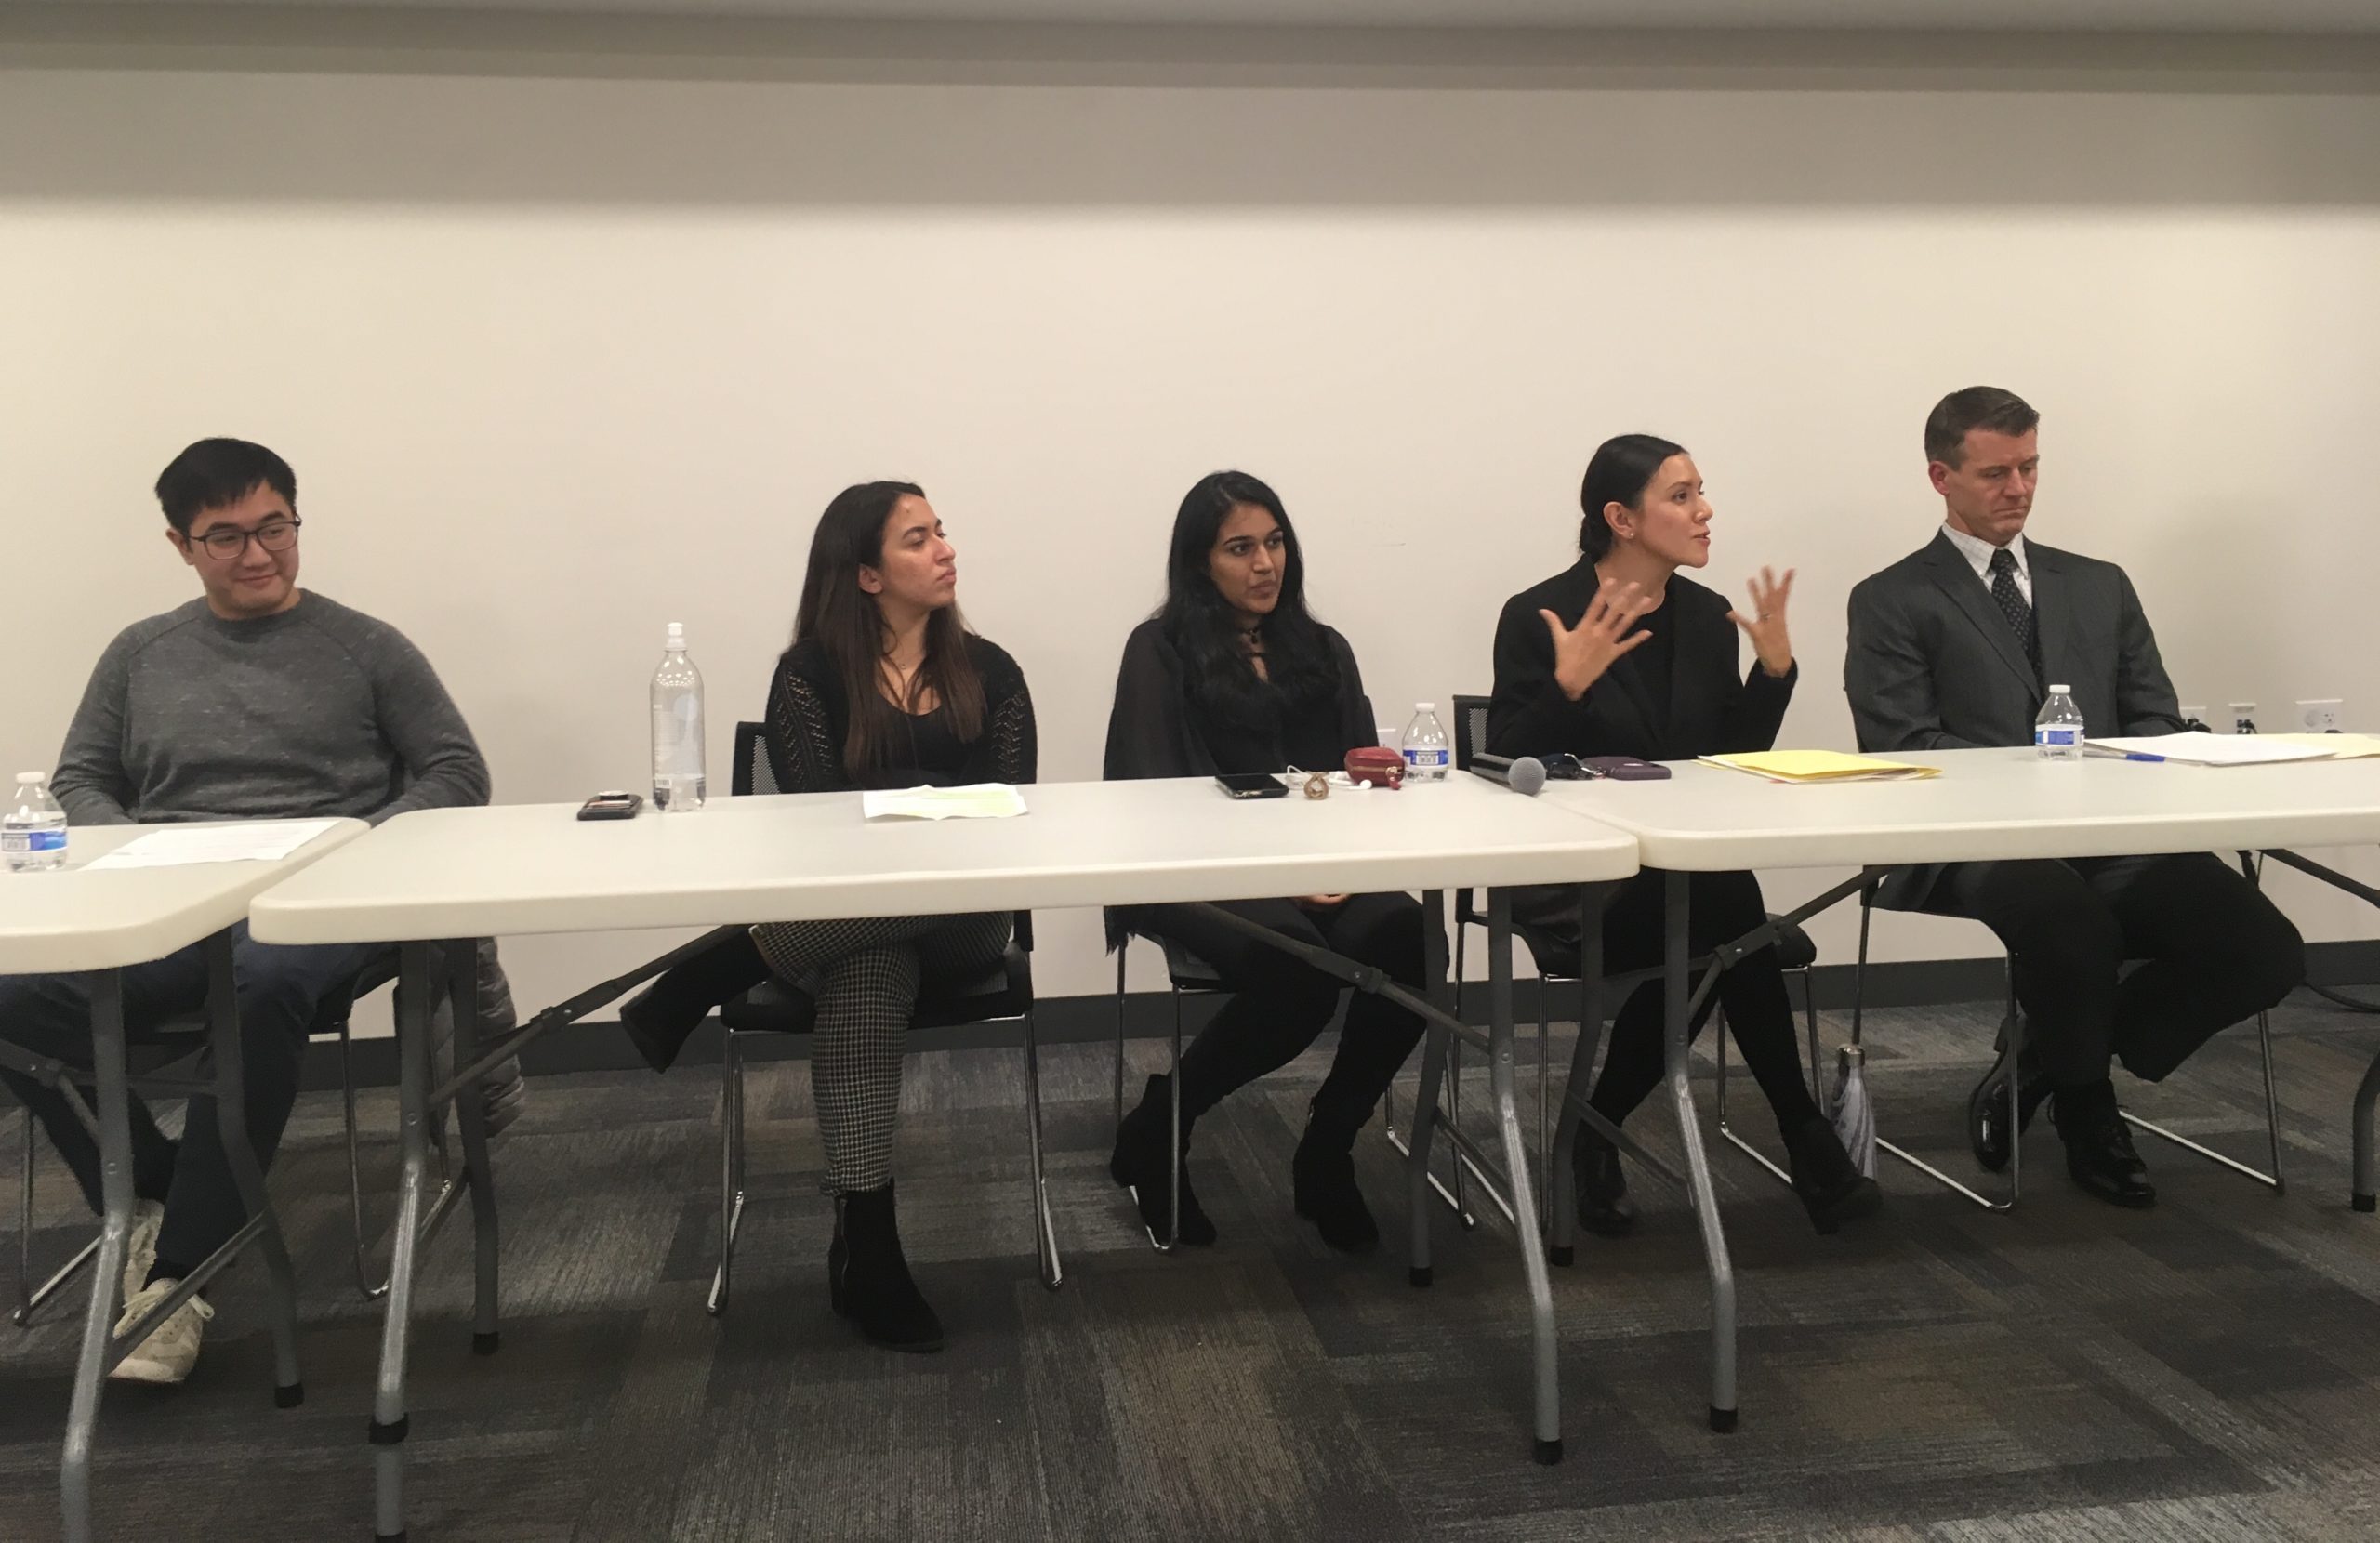 Willis Lin, Nicole Hicks, Ramya Kumar, Jo-Anneyre Cruz, and Michael Neary share tips for student success. (Photo by John Nugent)